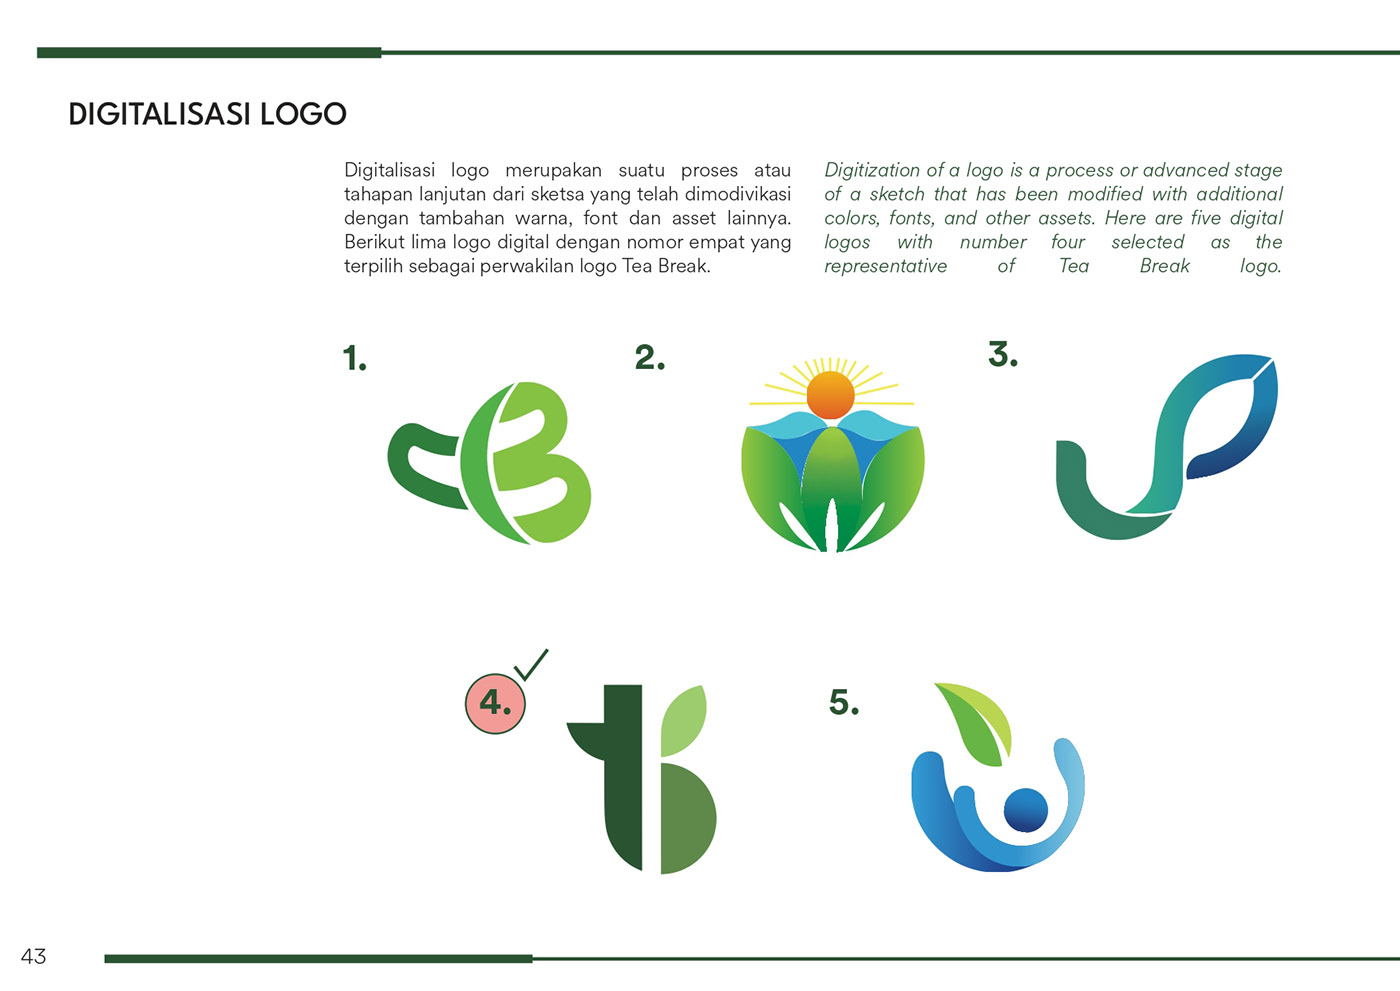 graphic design  layout book design digital illustration concept brand identity mockup design Logo Design Graphic Standard Manual rebranding typography  